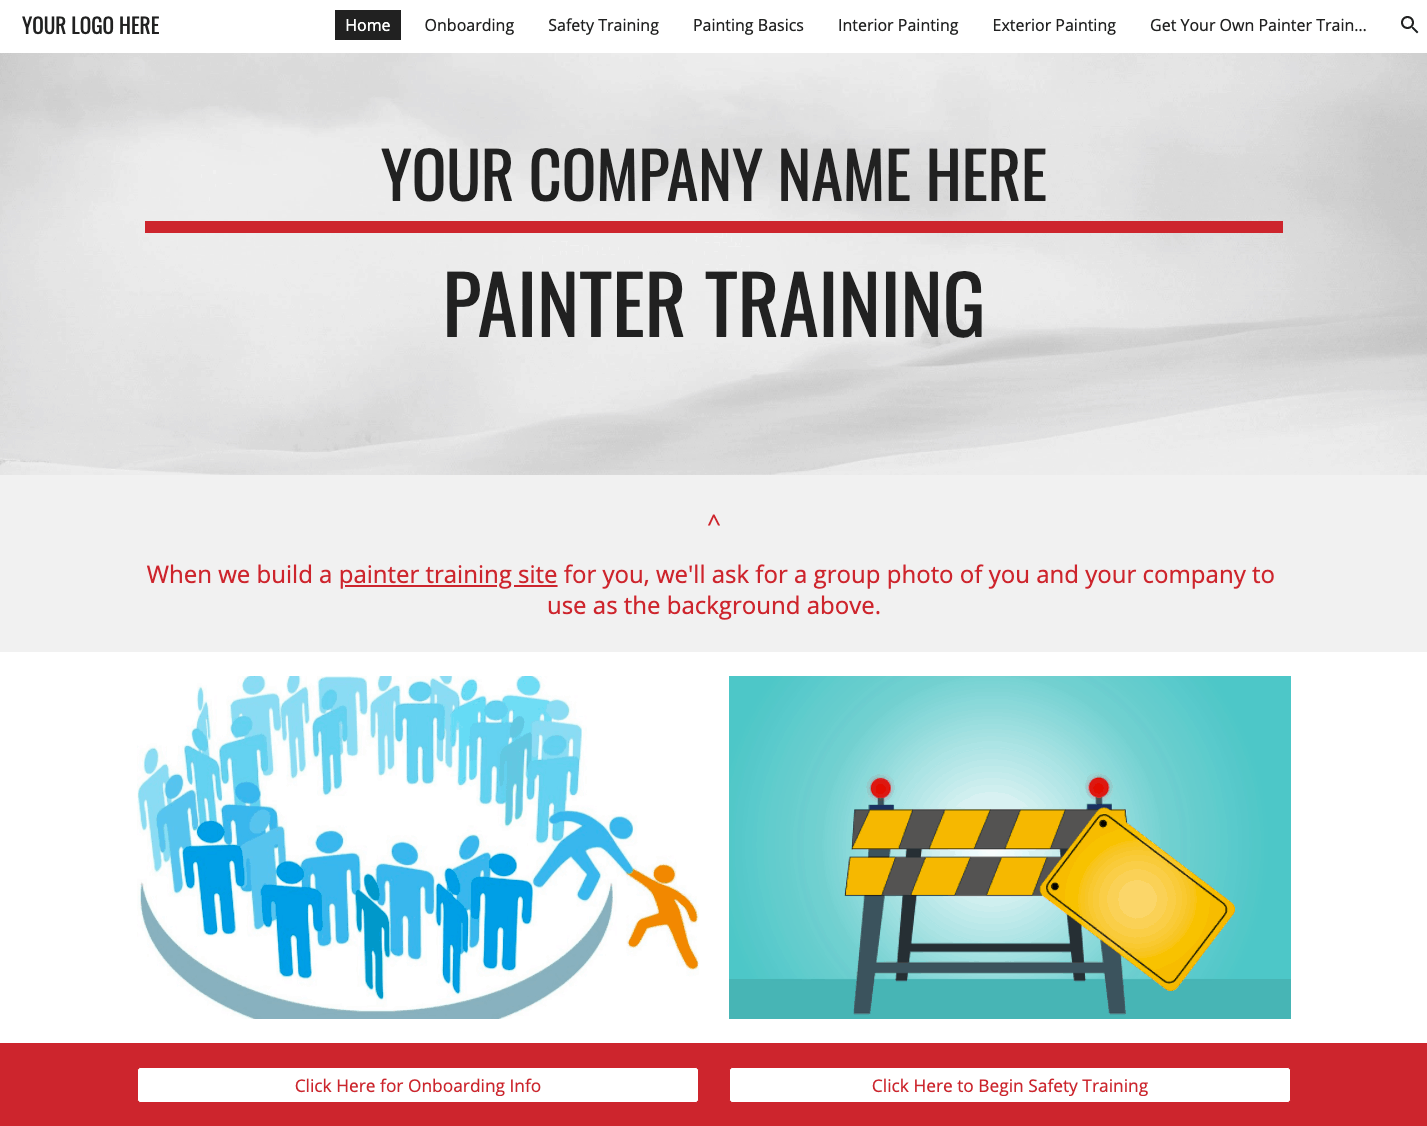 Demo painter training site